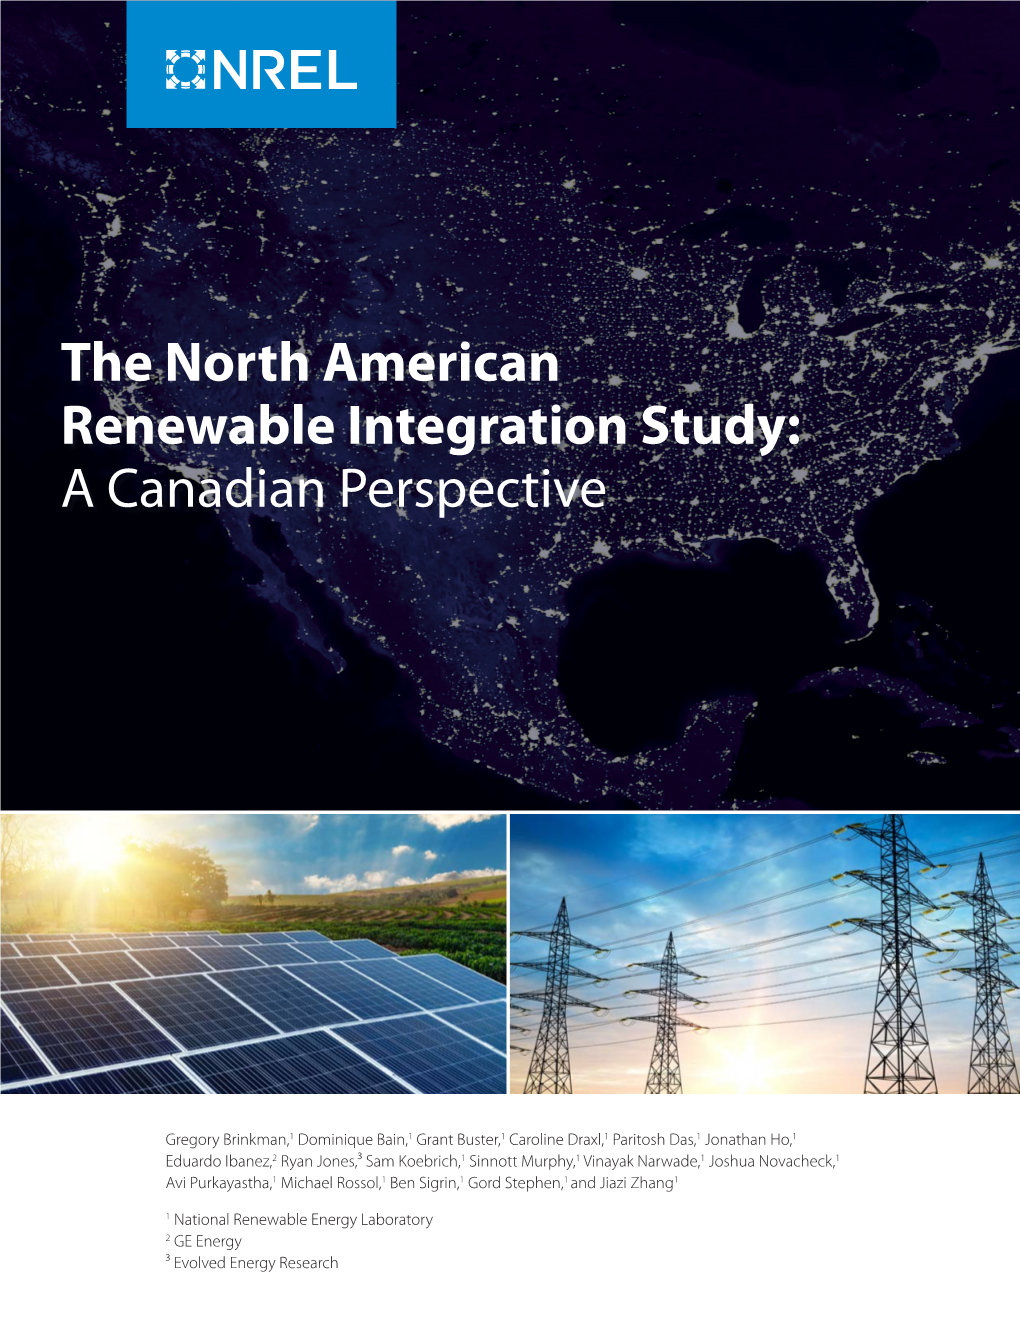 The North American Renewable Integration Study (NARIS)